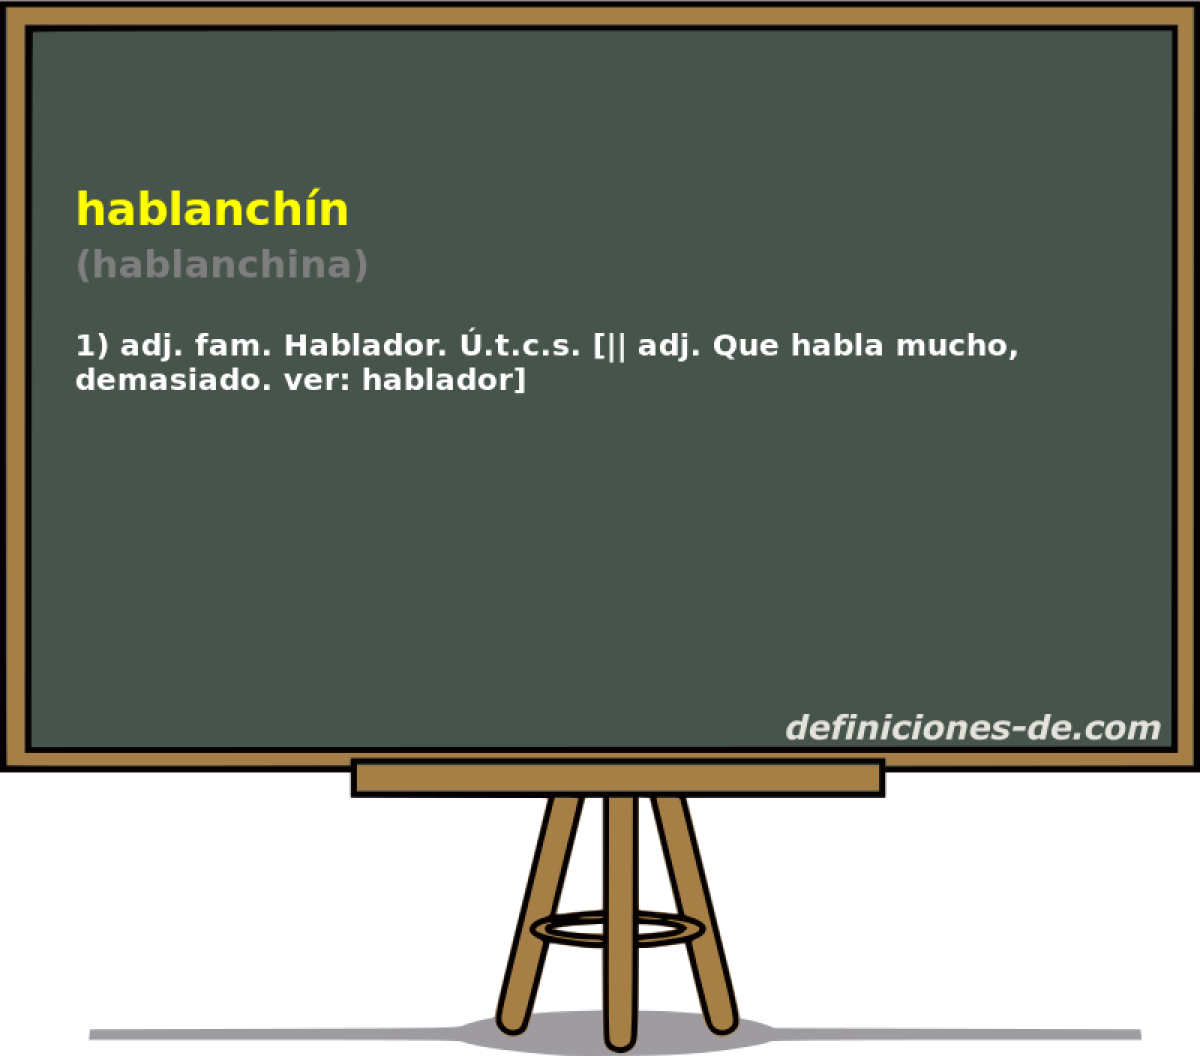 hablanchn (hablanchina)